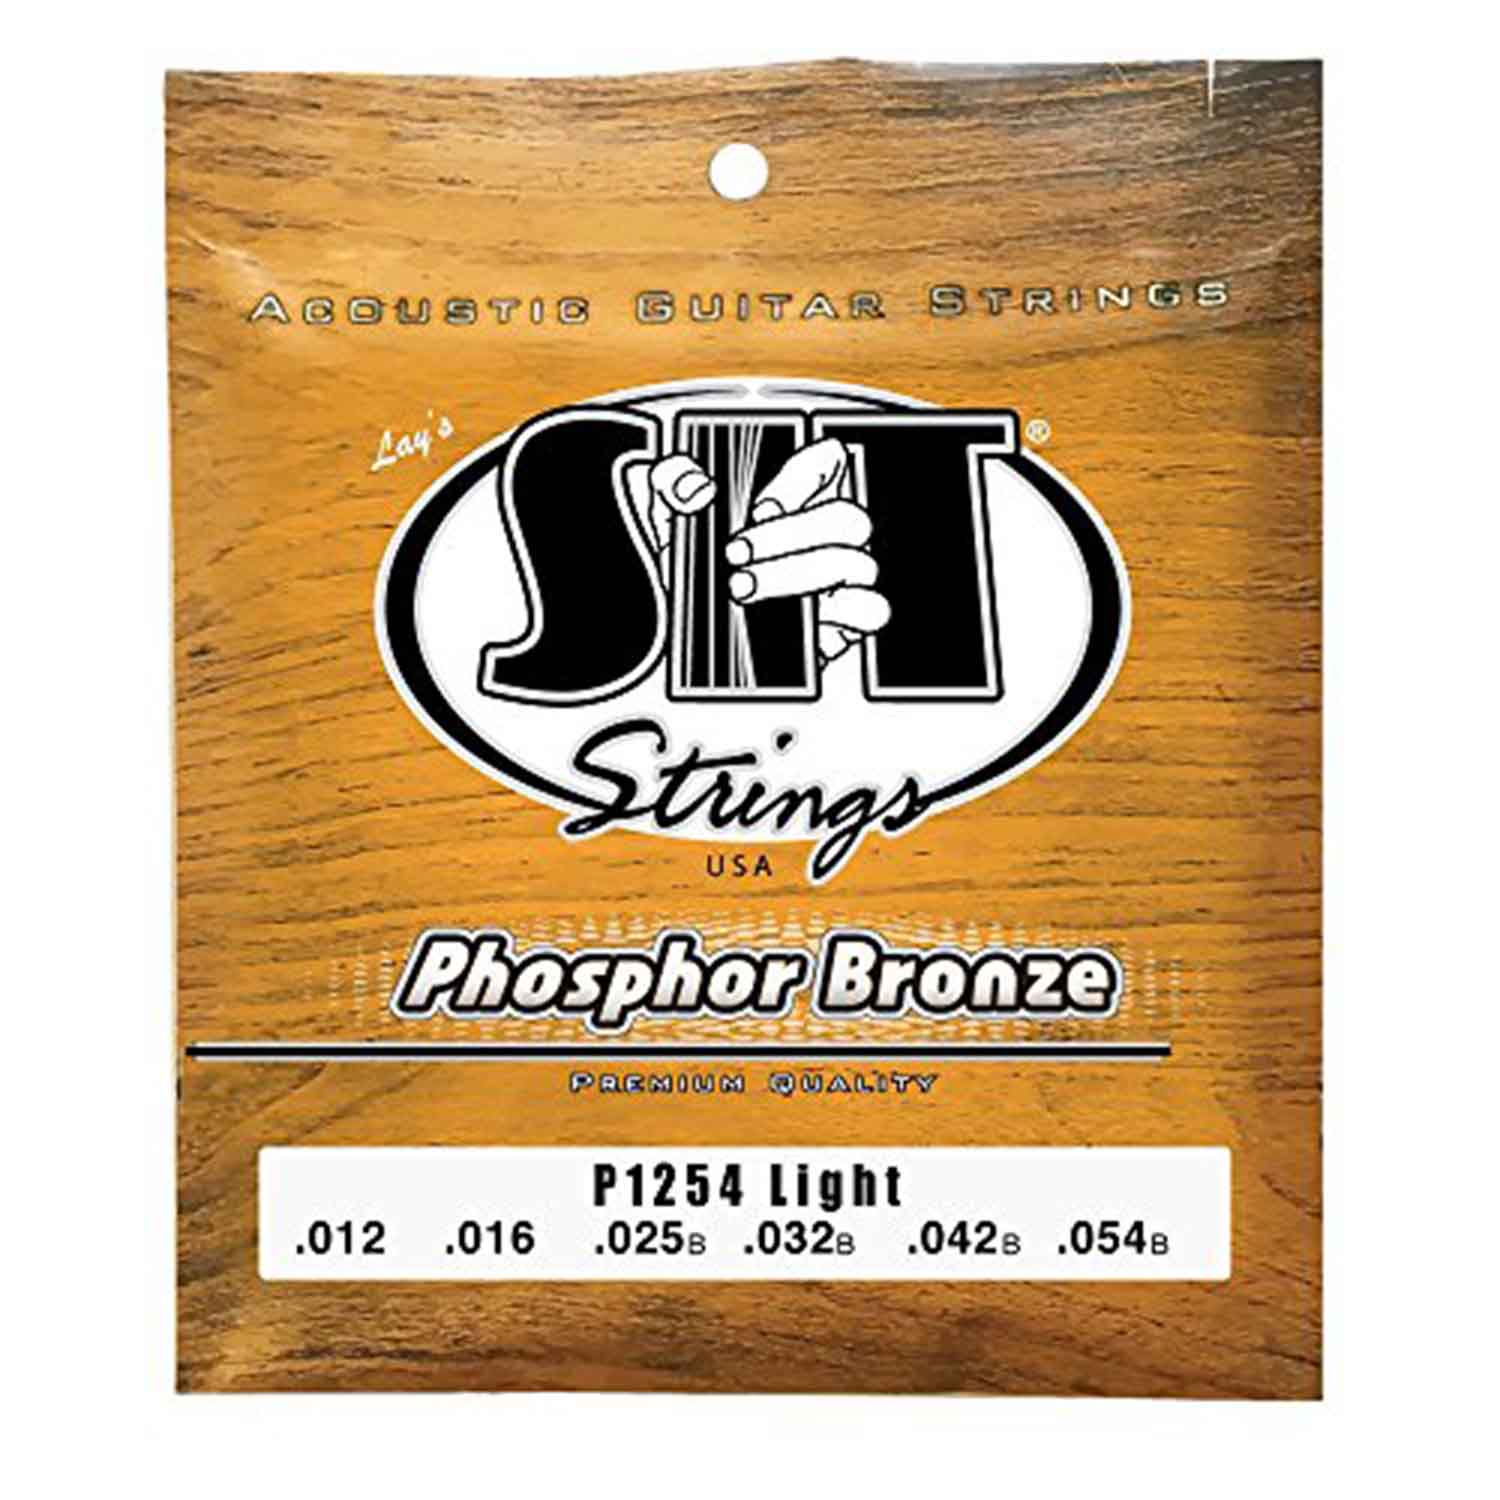 SIT Strings P1254 Light Phosphor Bronze Acoustic Guitar String - Hollywood DJ